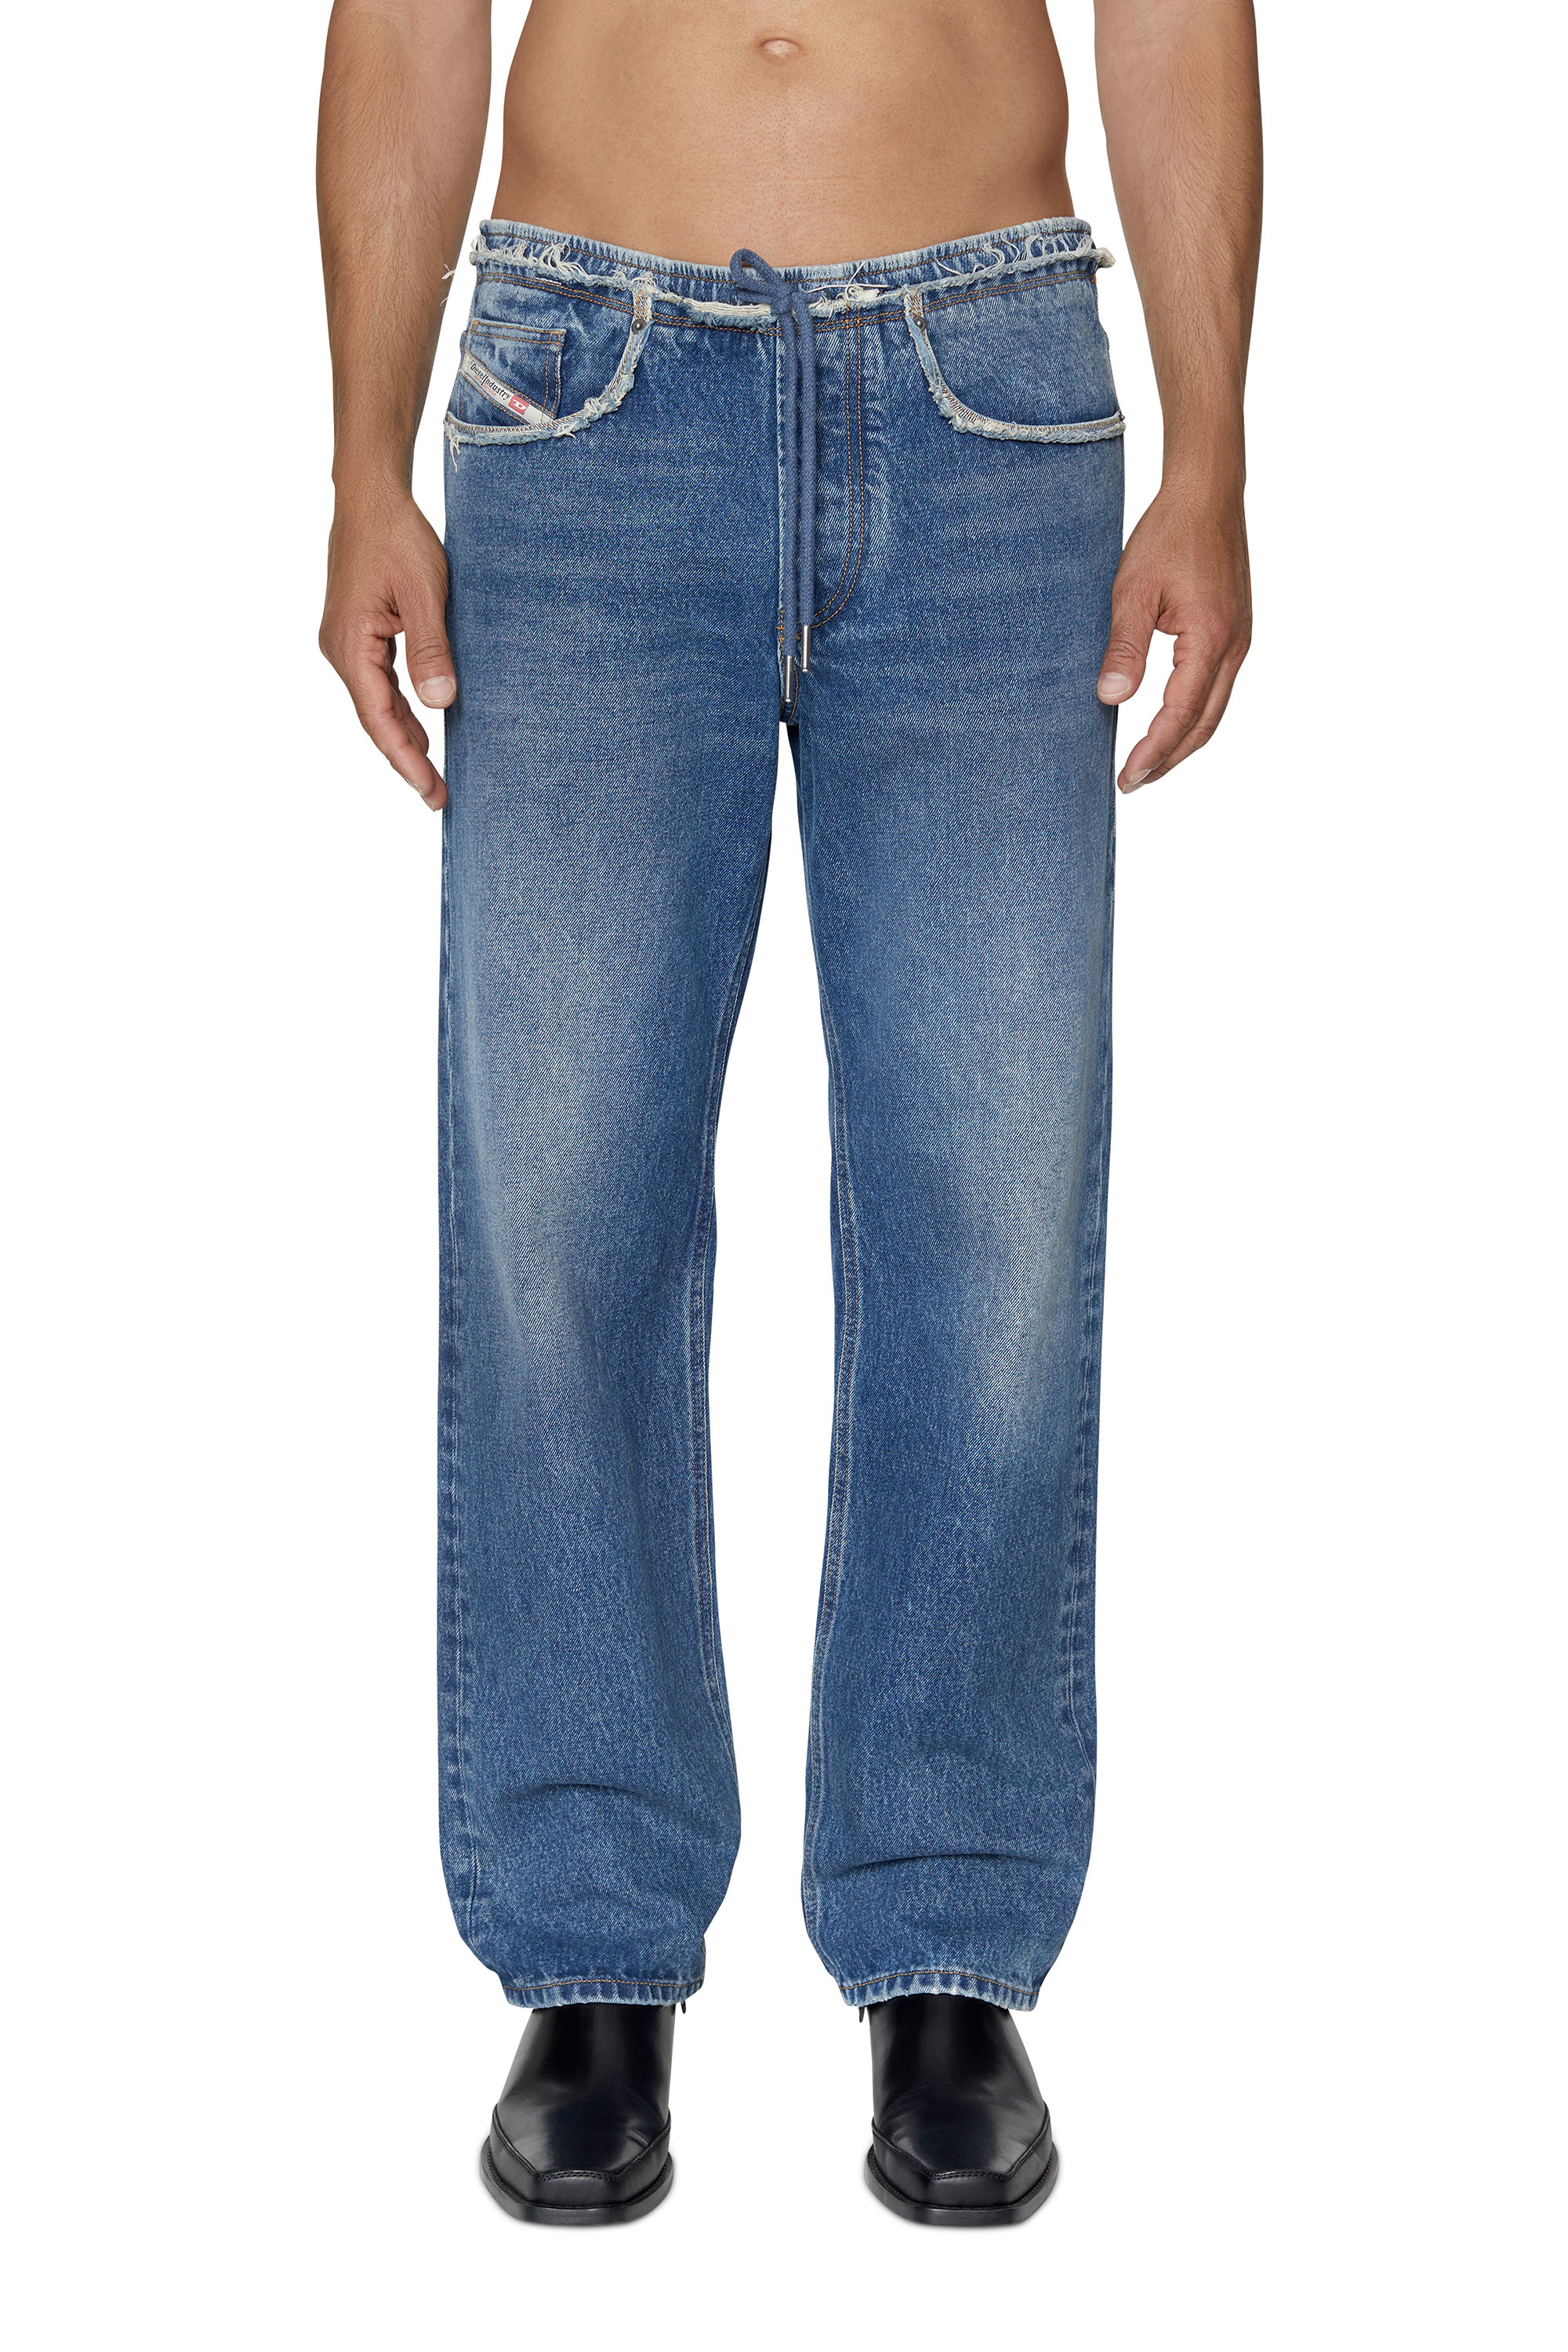 D-Sert 007F2 Straight Jeans, Medium blue - Jeans